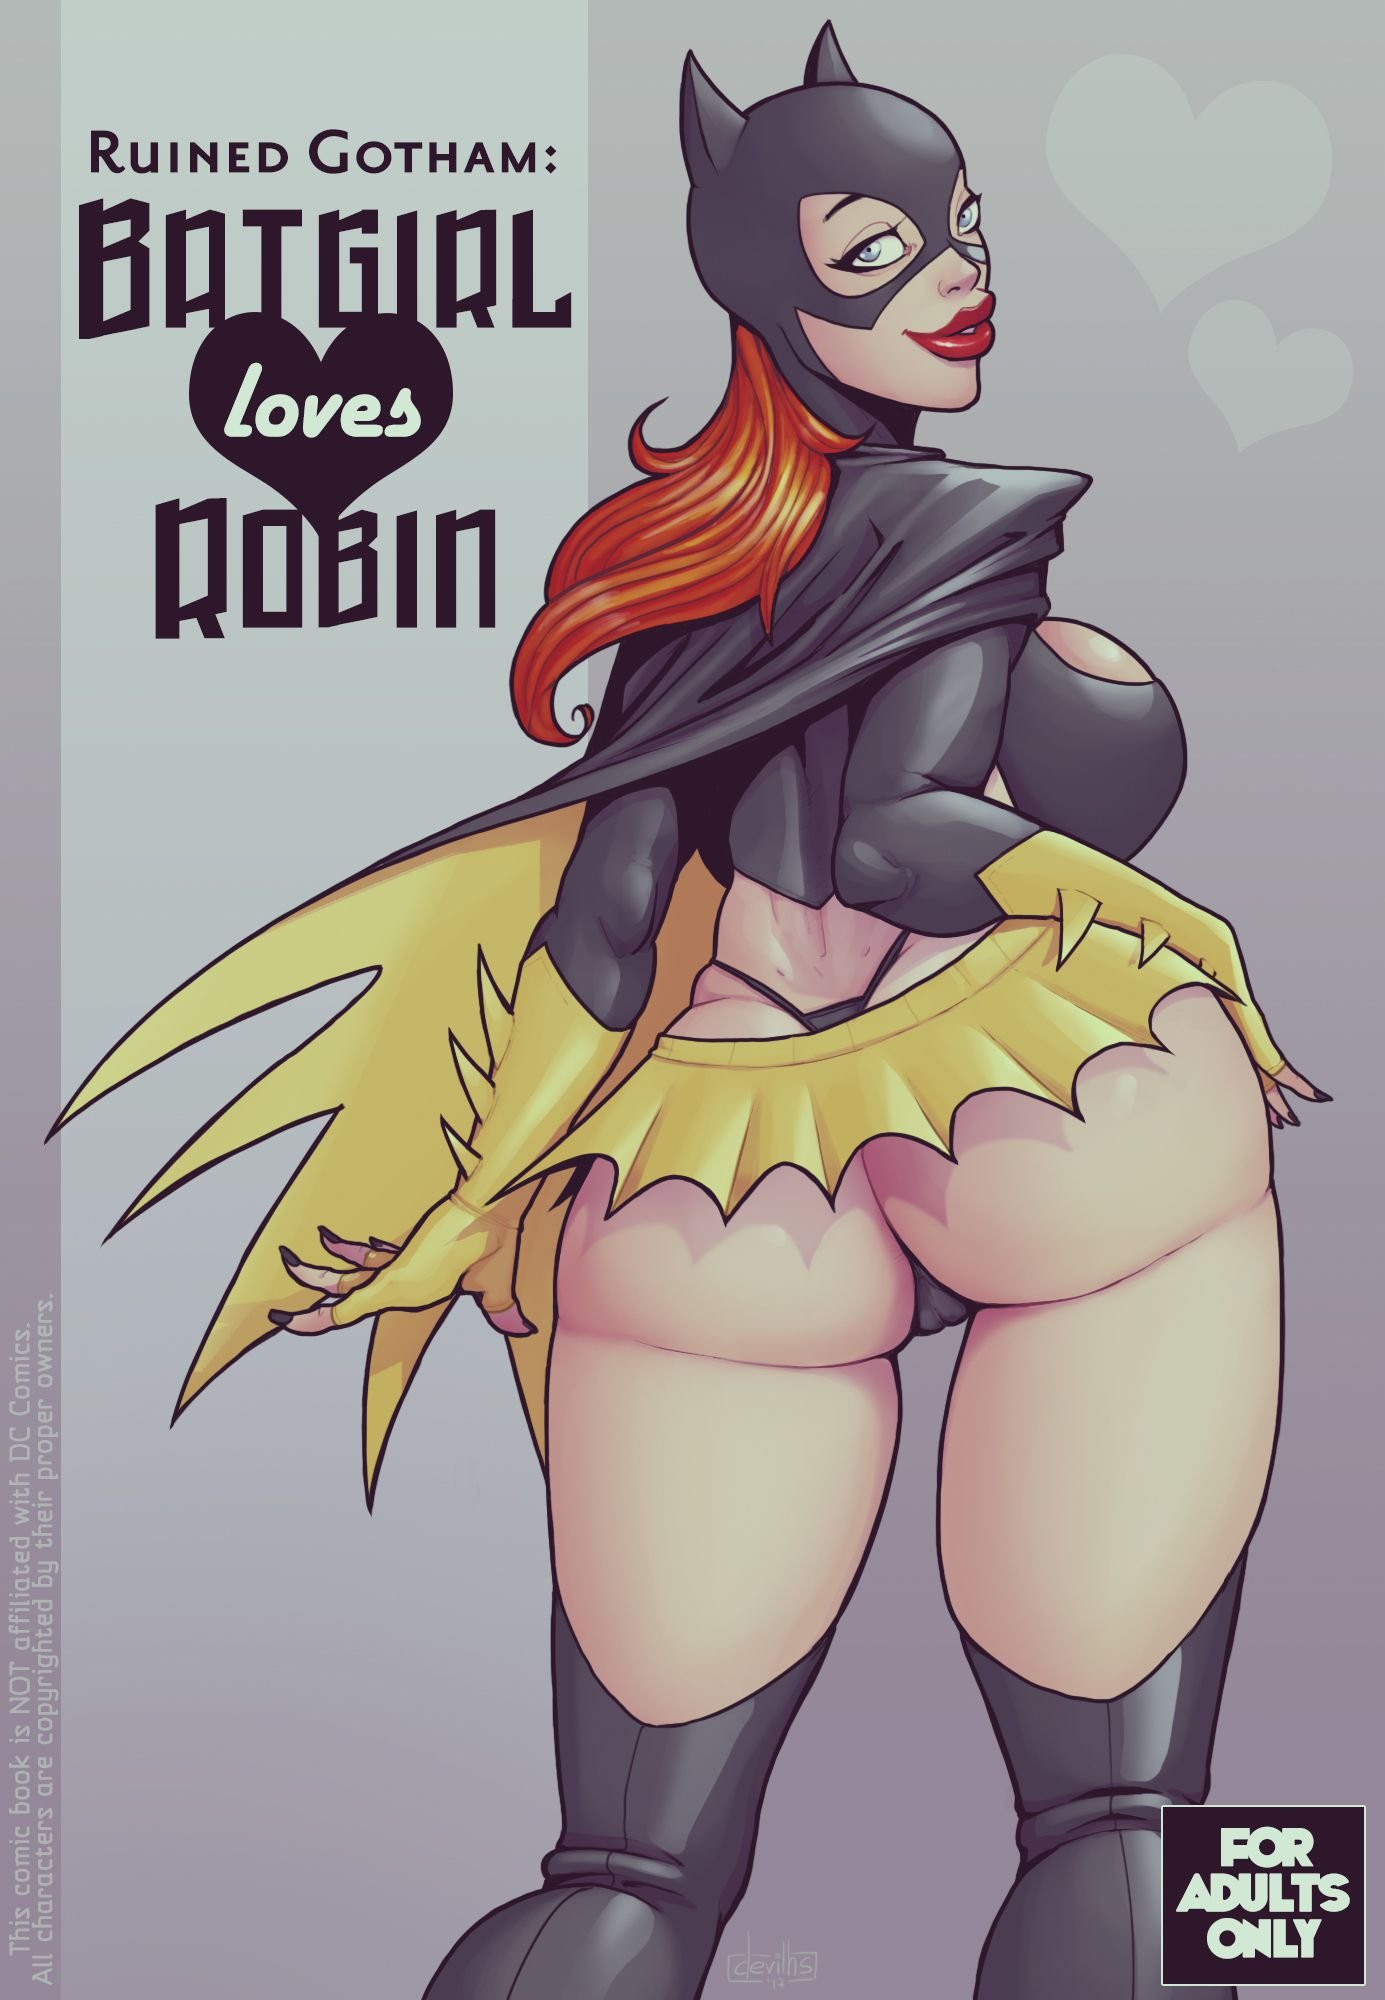 Ruined Gotham - Batgirl Loves Robin (Batman) [DevilHS] Porn Comic -  AllPornComic